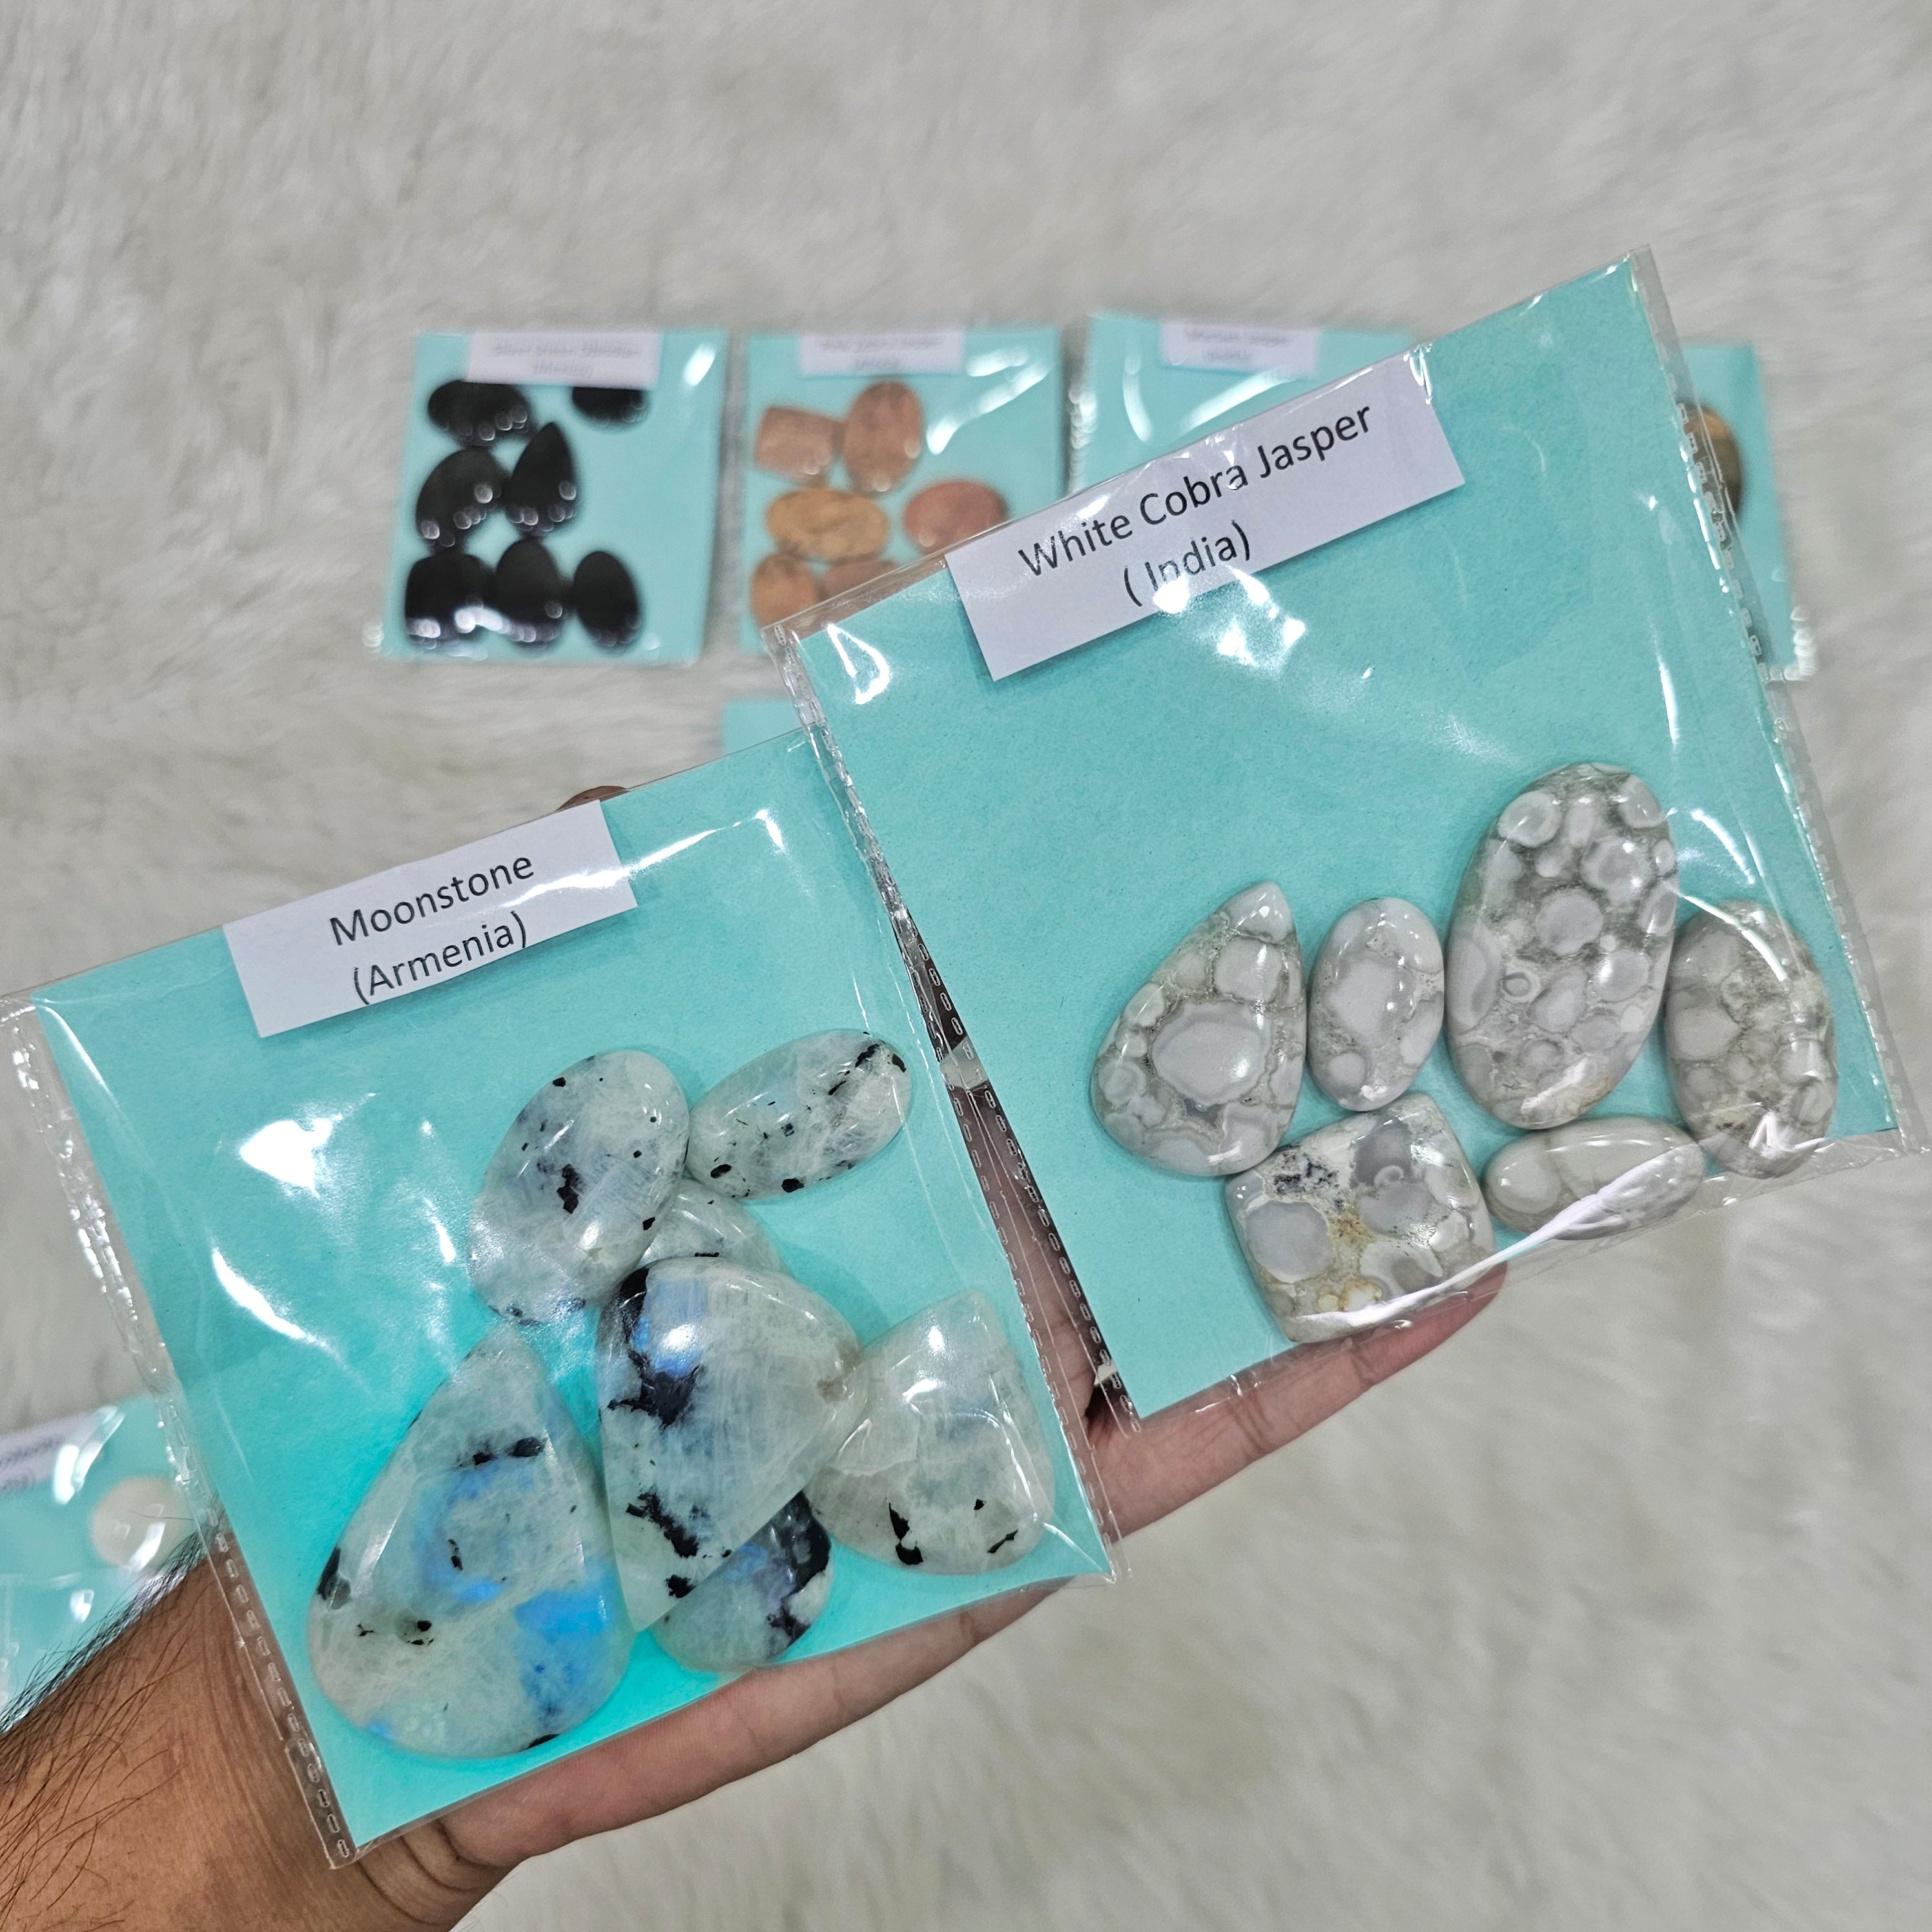 15 Sets of Exotic Gemstone cabochons | June Edition Box